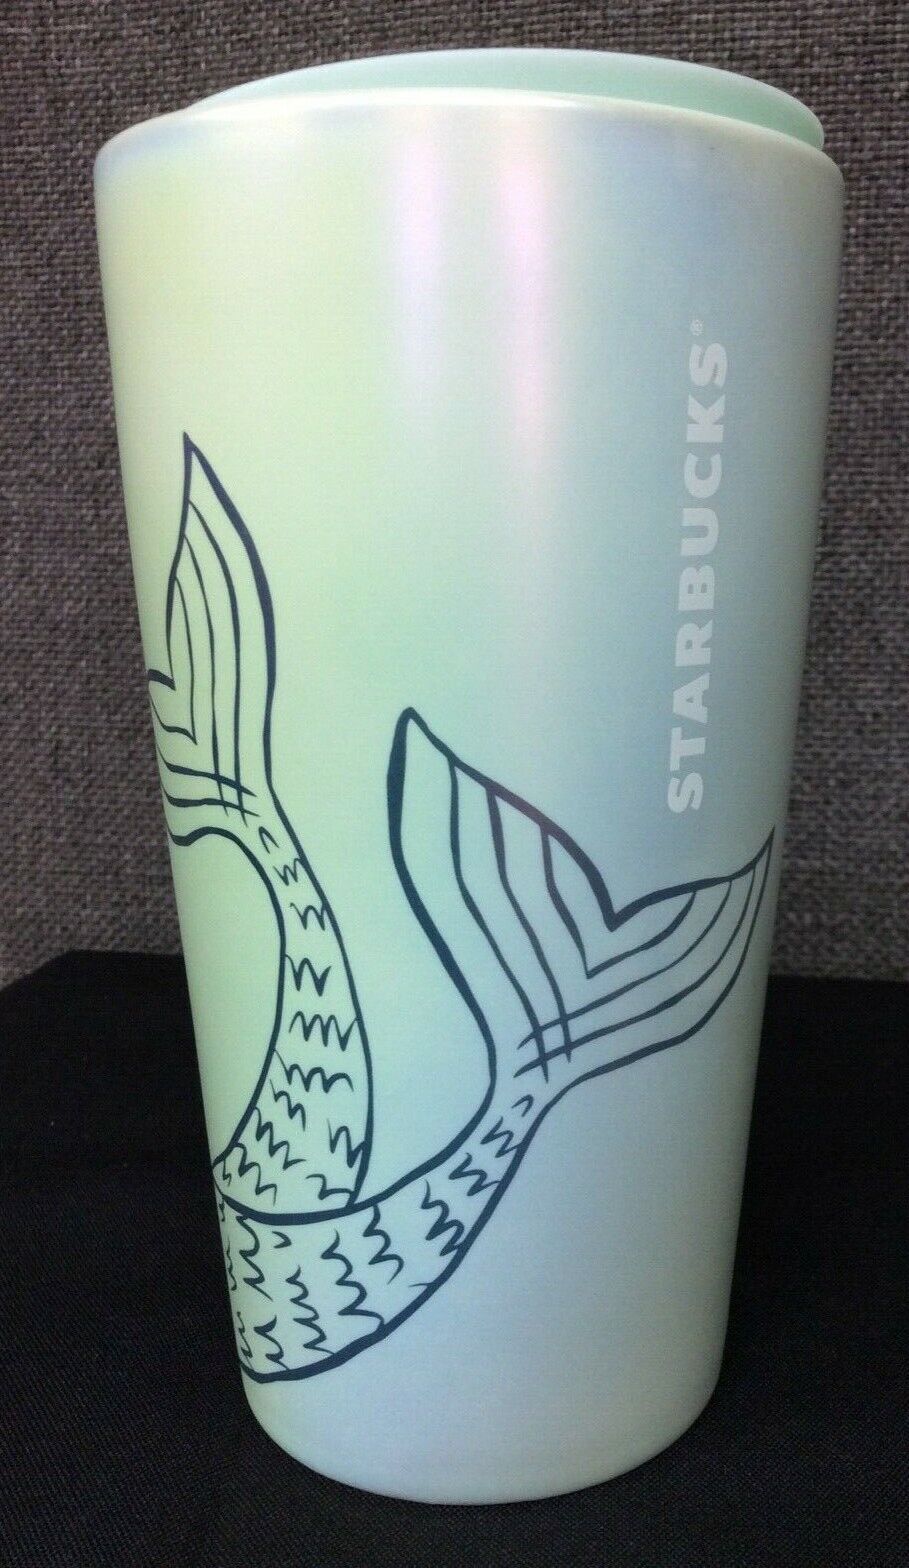 NEW Starbucks Siren Logo Double Wall Ceramic Travel Mug White Tumbler 12 oz  NWT